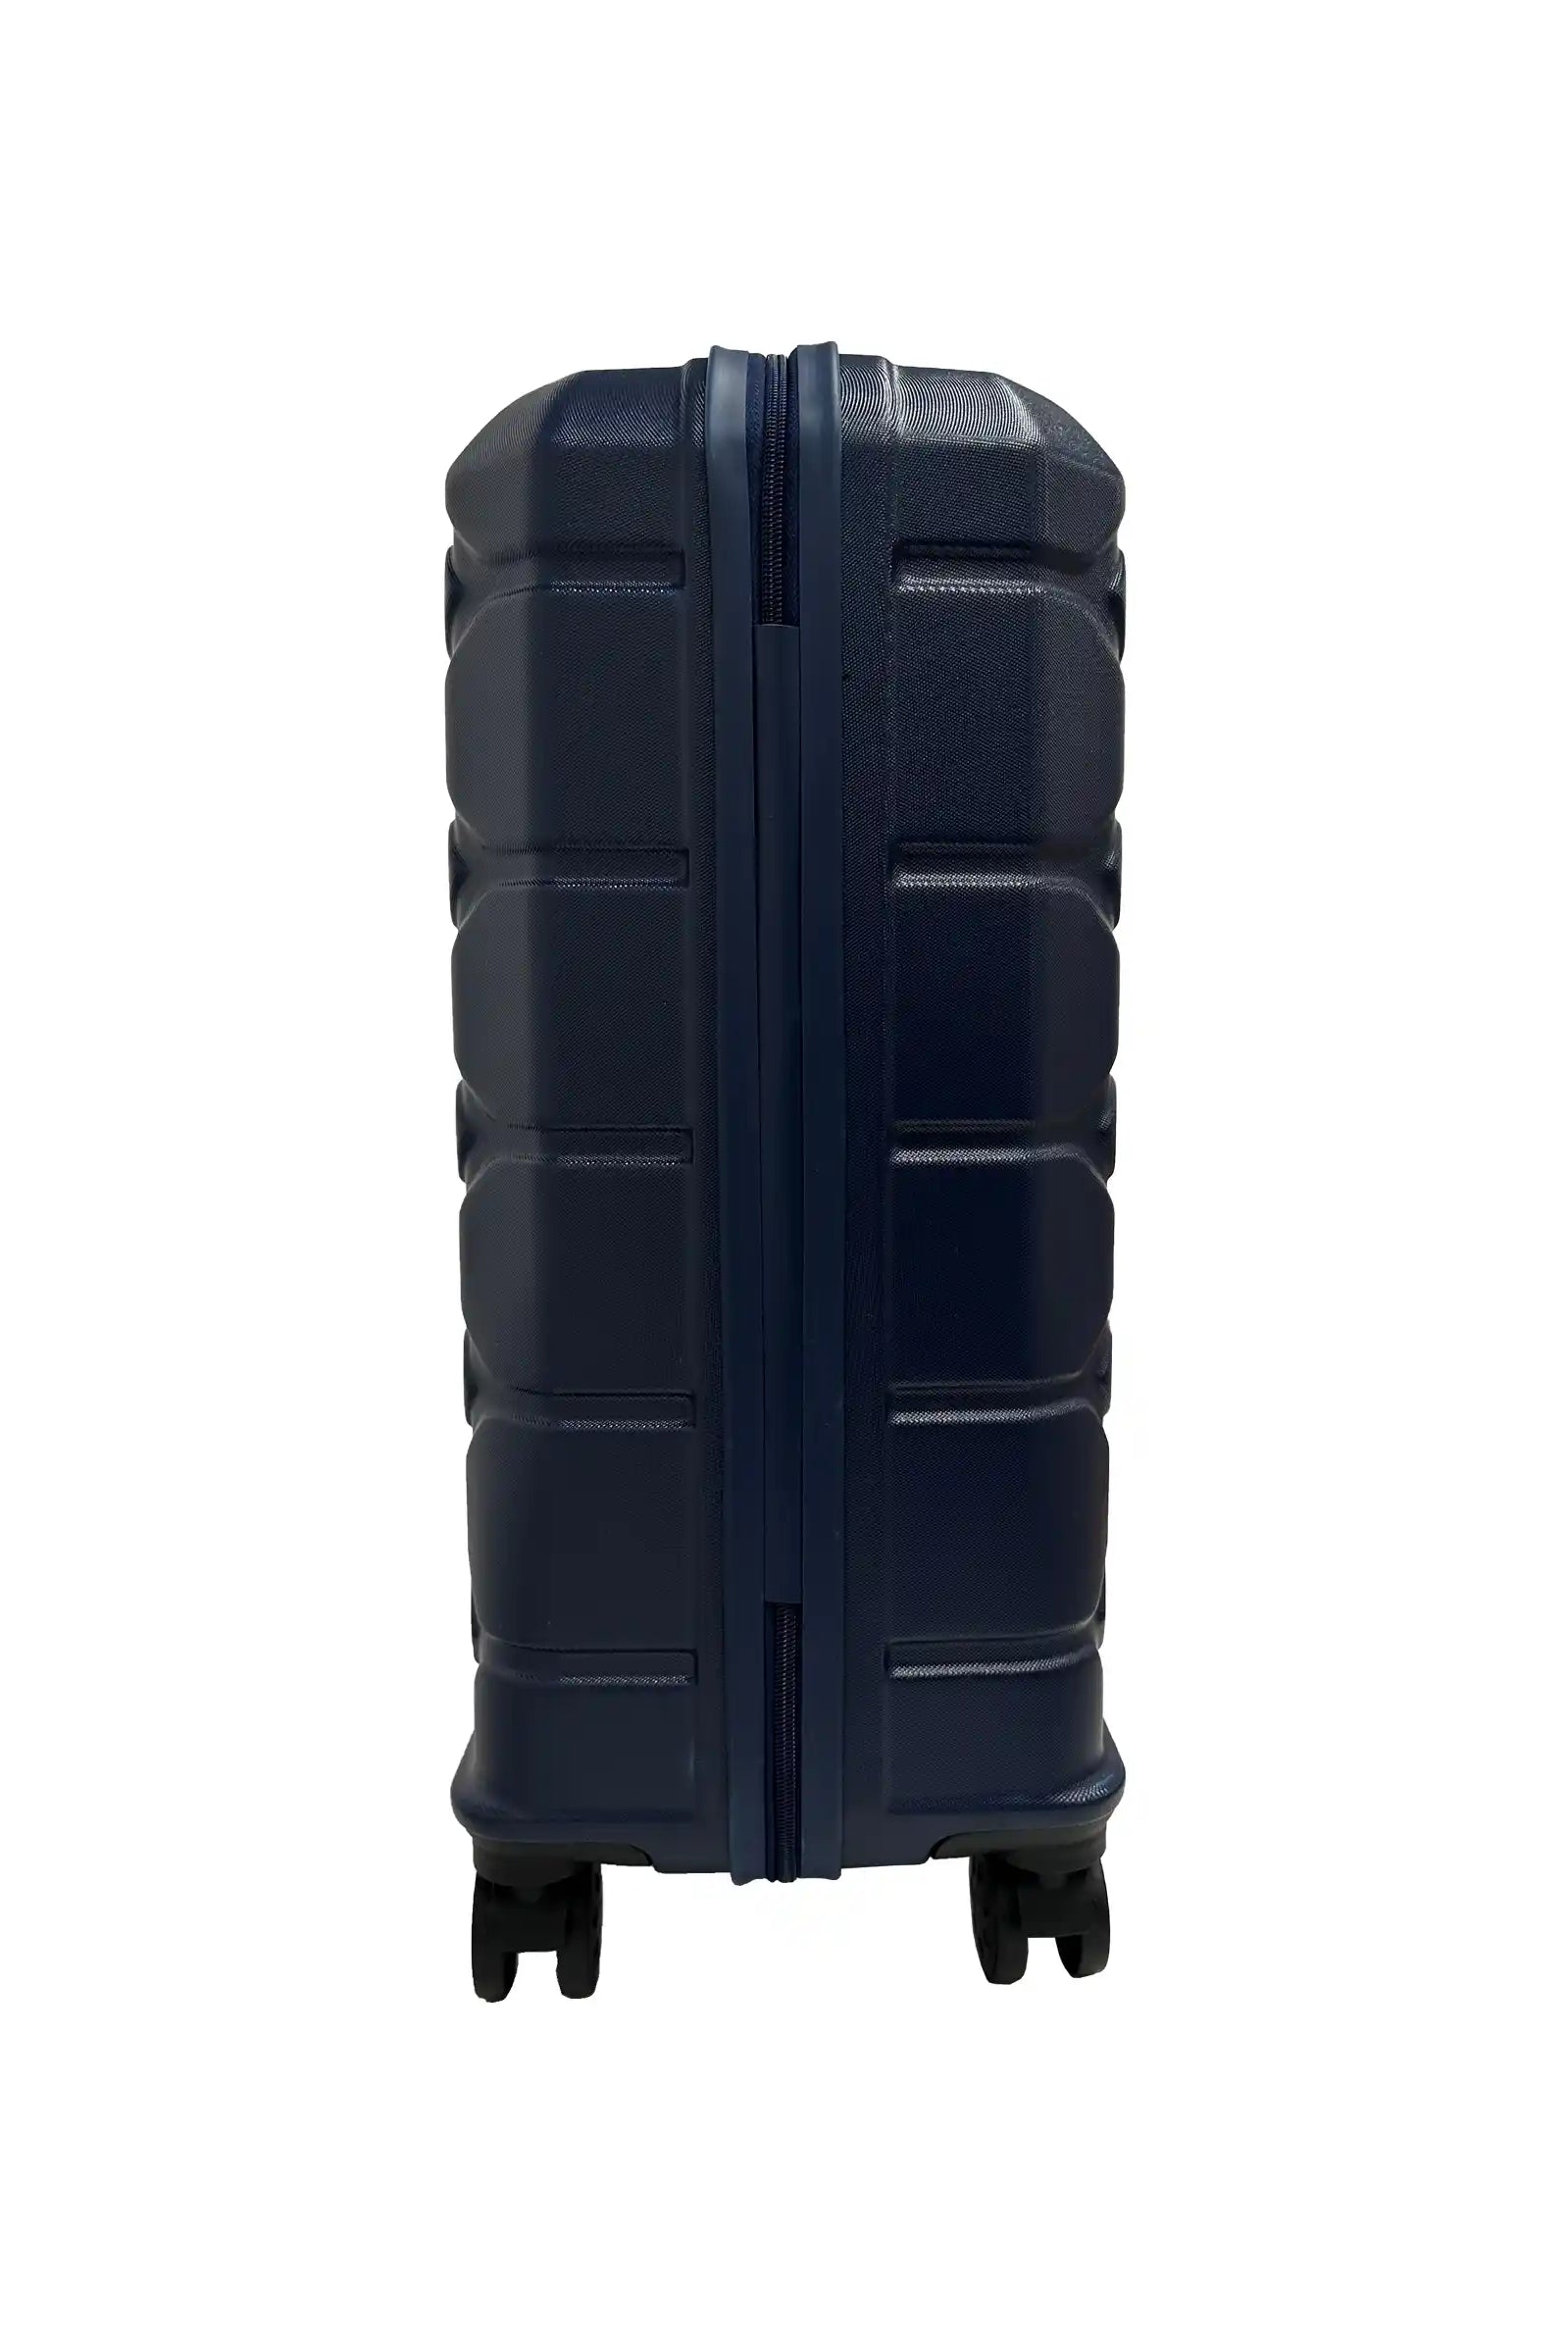 jasmin navy medium suitcase with wheels